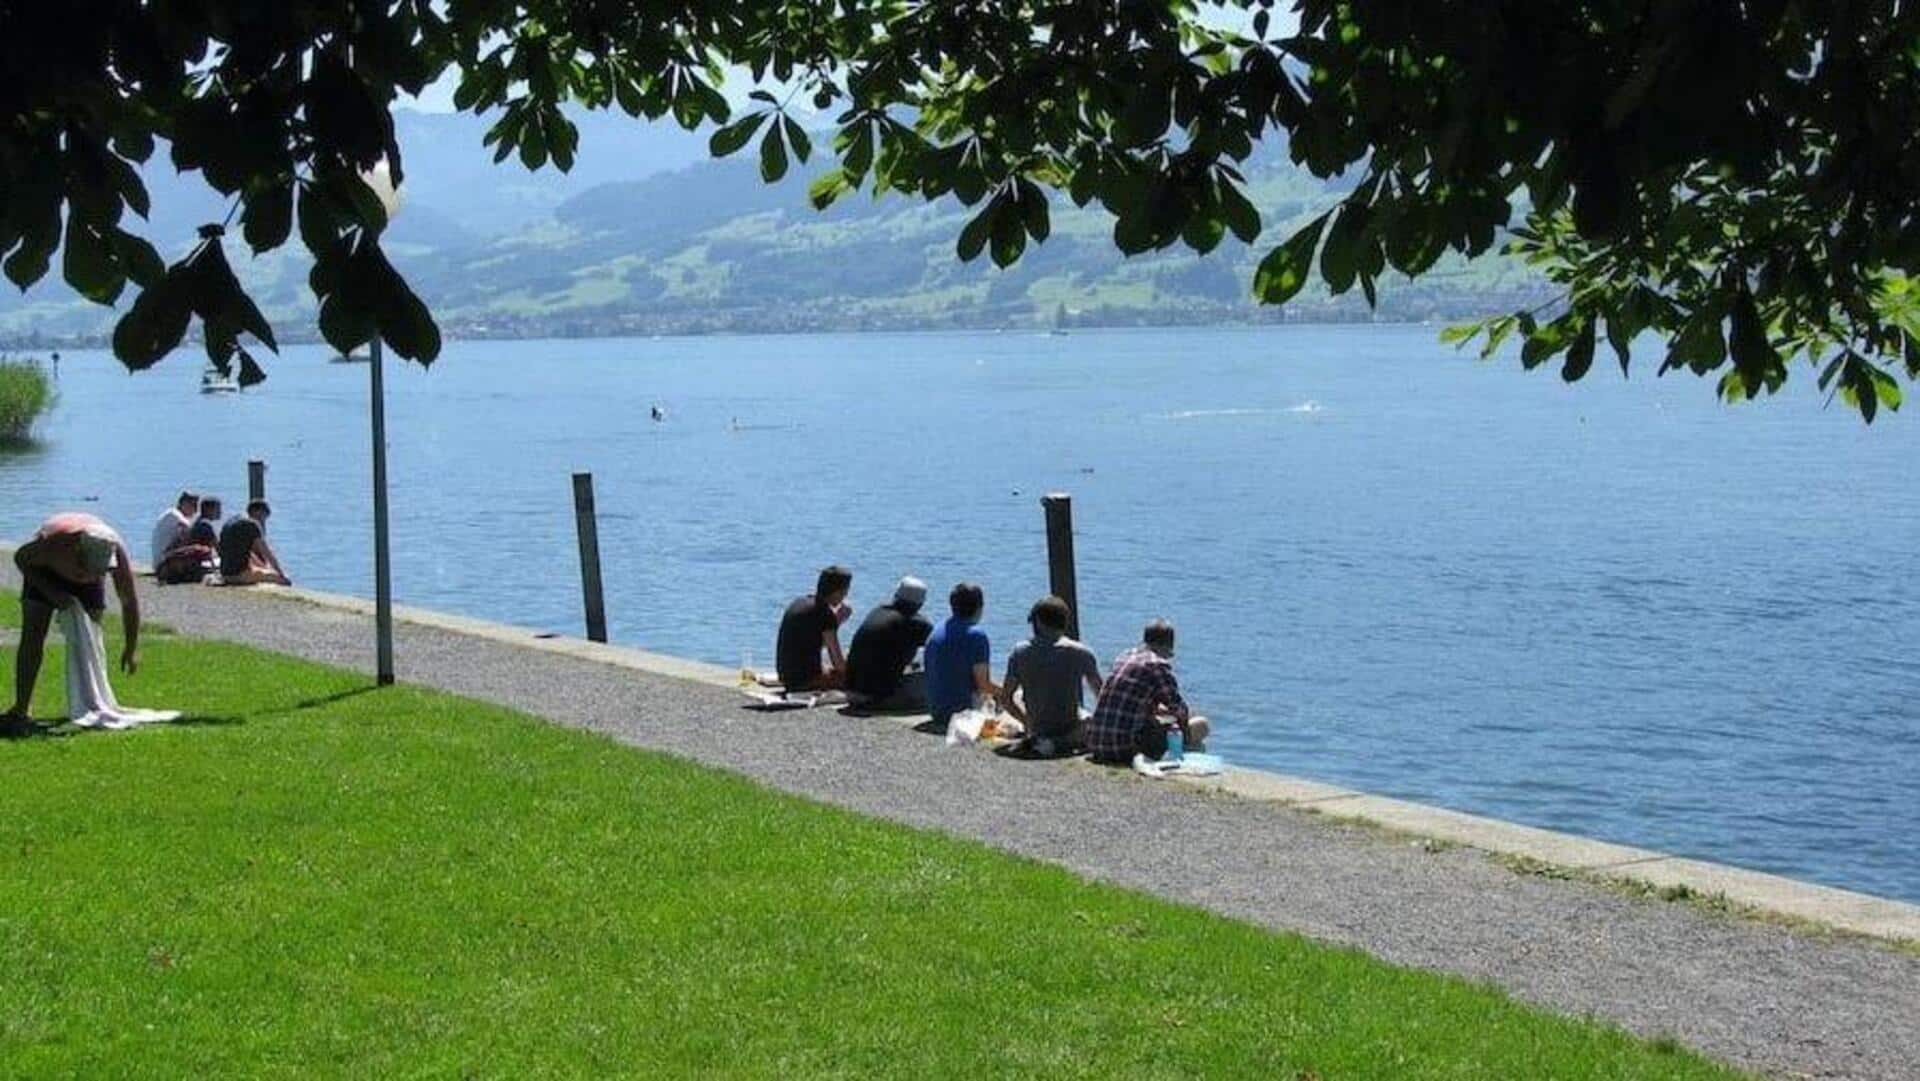 Panduan petualangan bersepeda di tepi danau Zurich